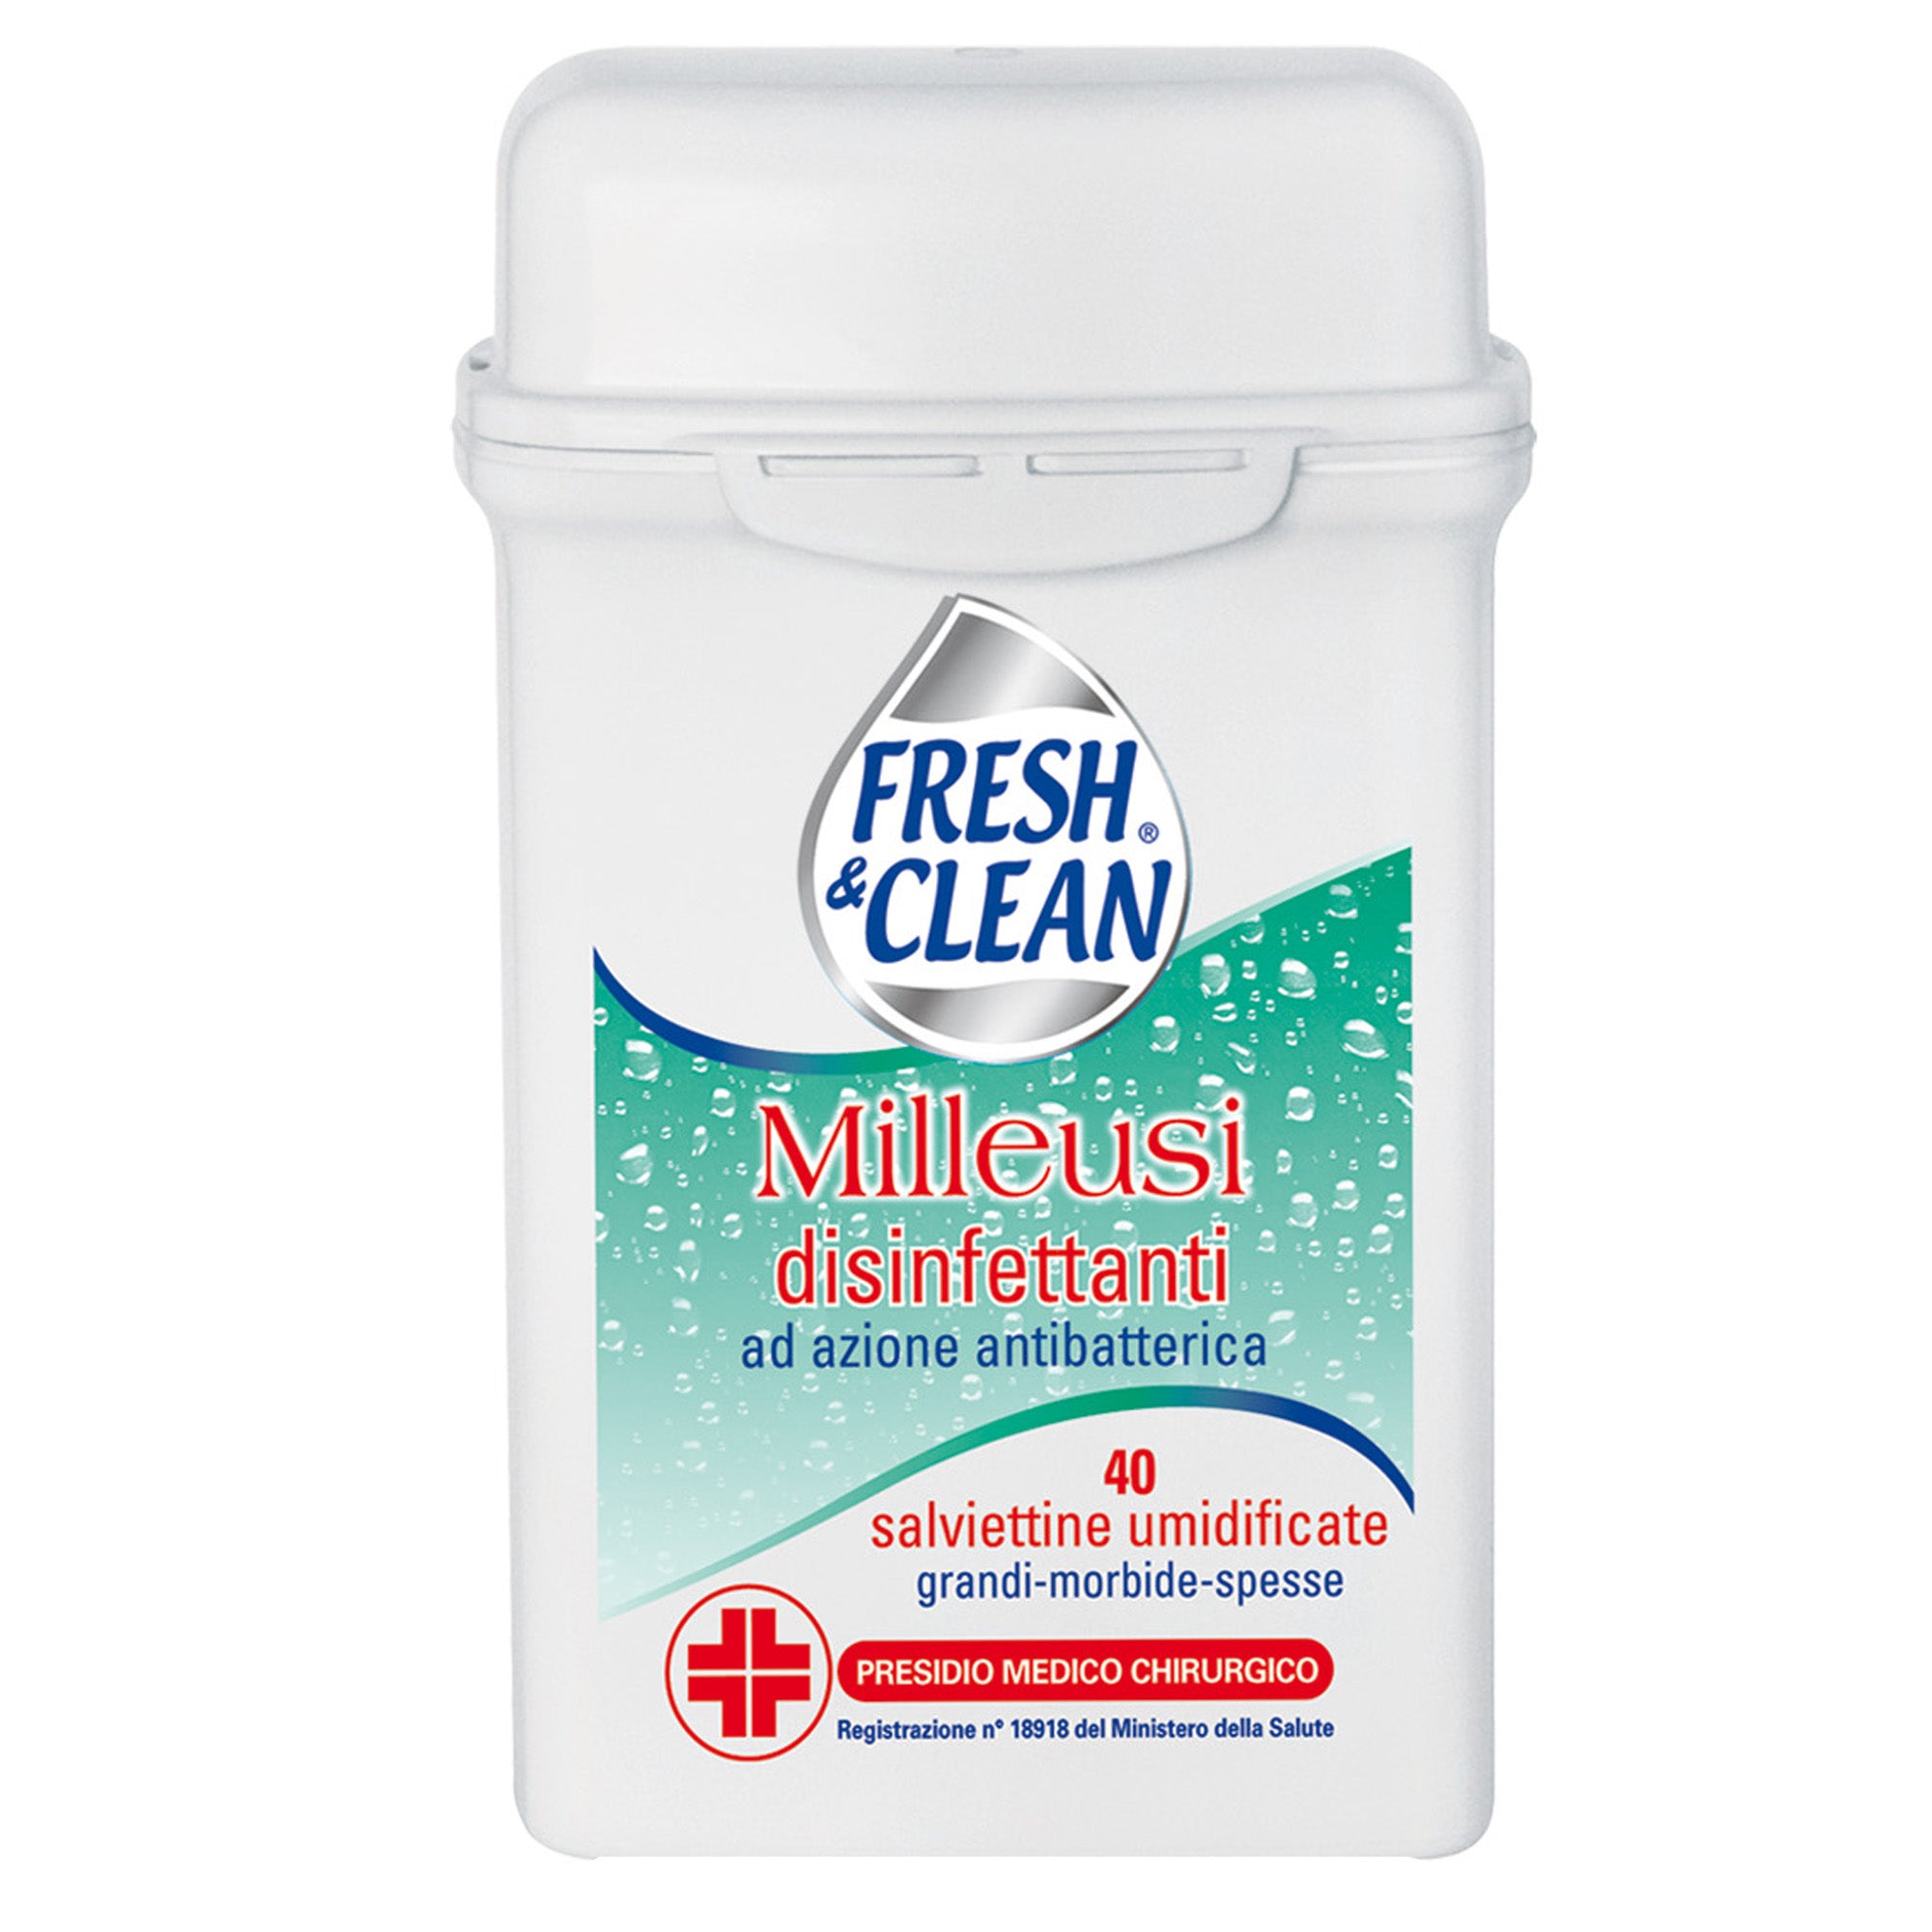 fresh&clean-barattolo-40-salviette-disinfettanti-milleusi-antibatterico-freshclean